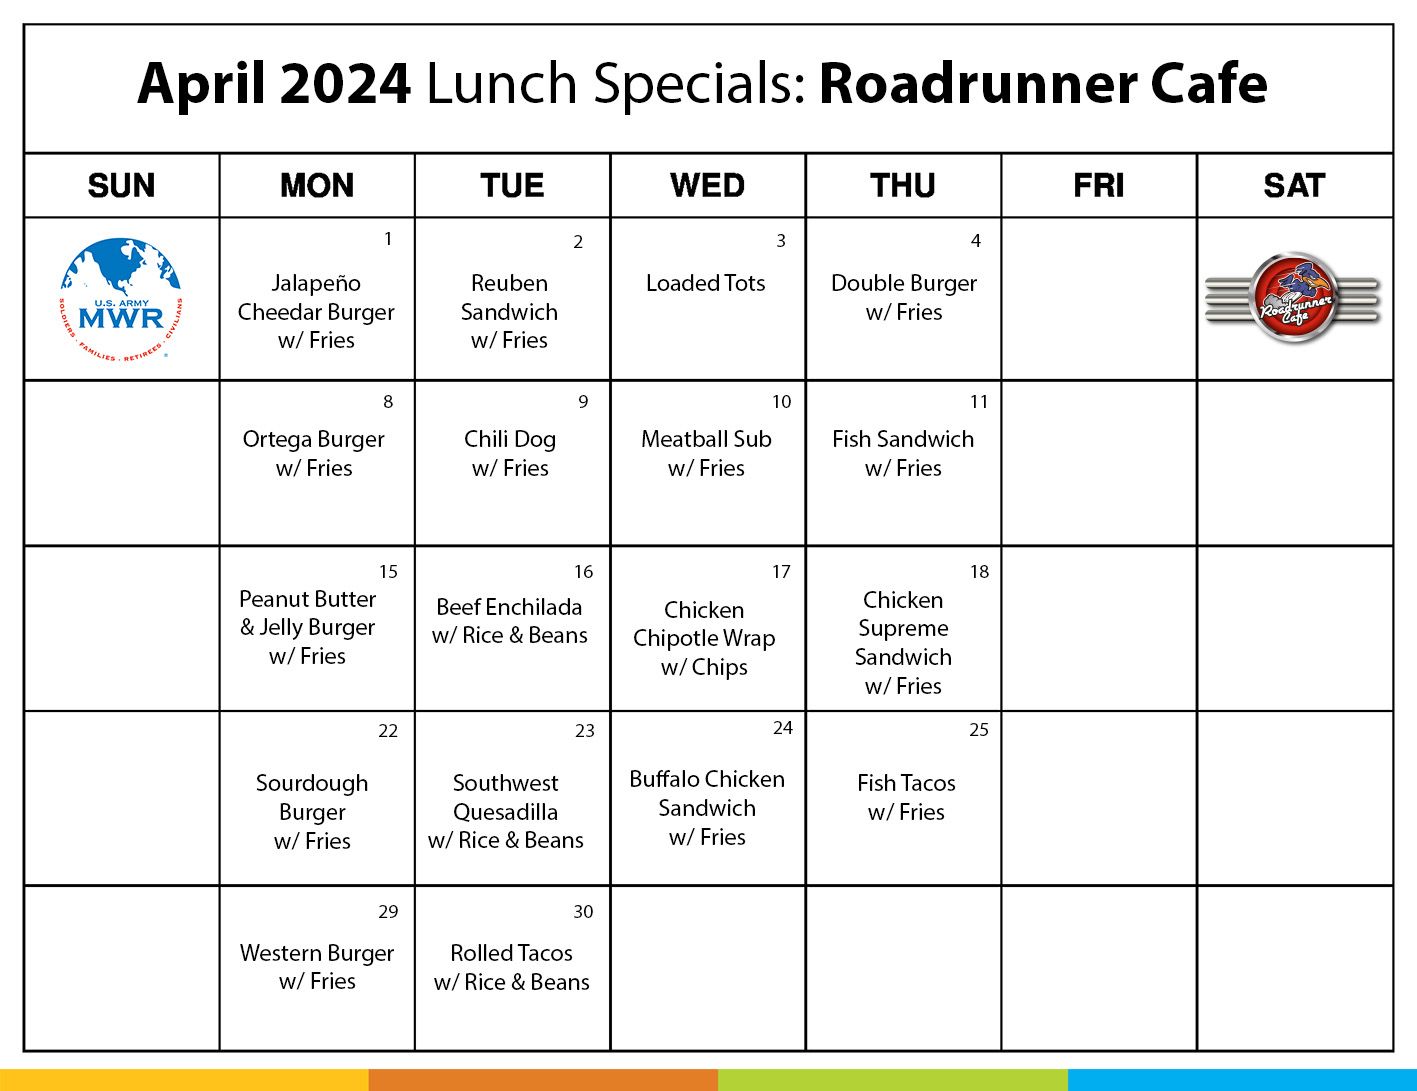 YPG_Roadrunner_April Lunch Specials_2024.jpg